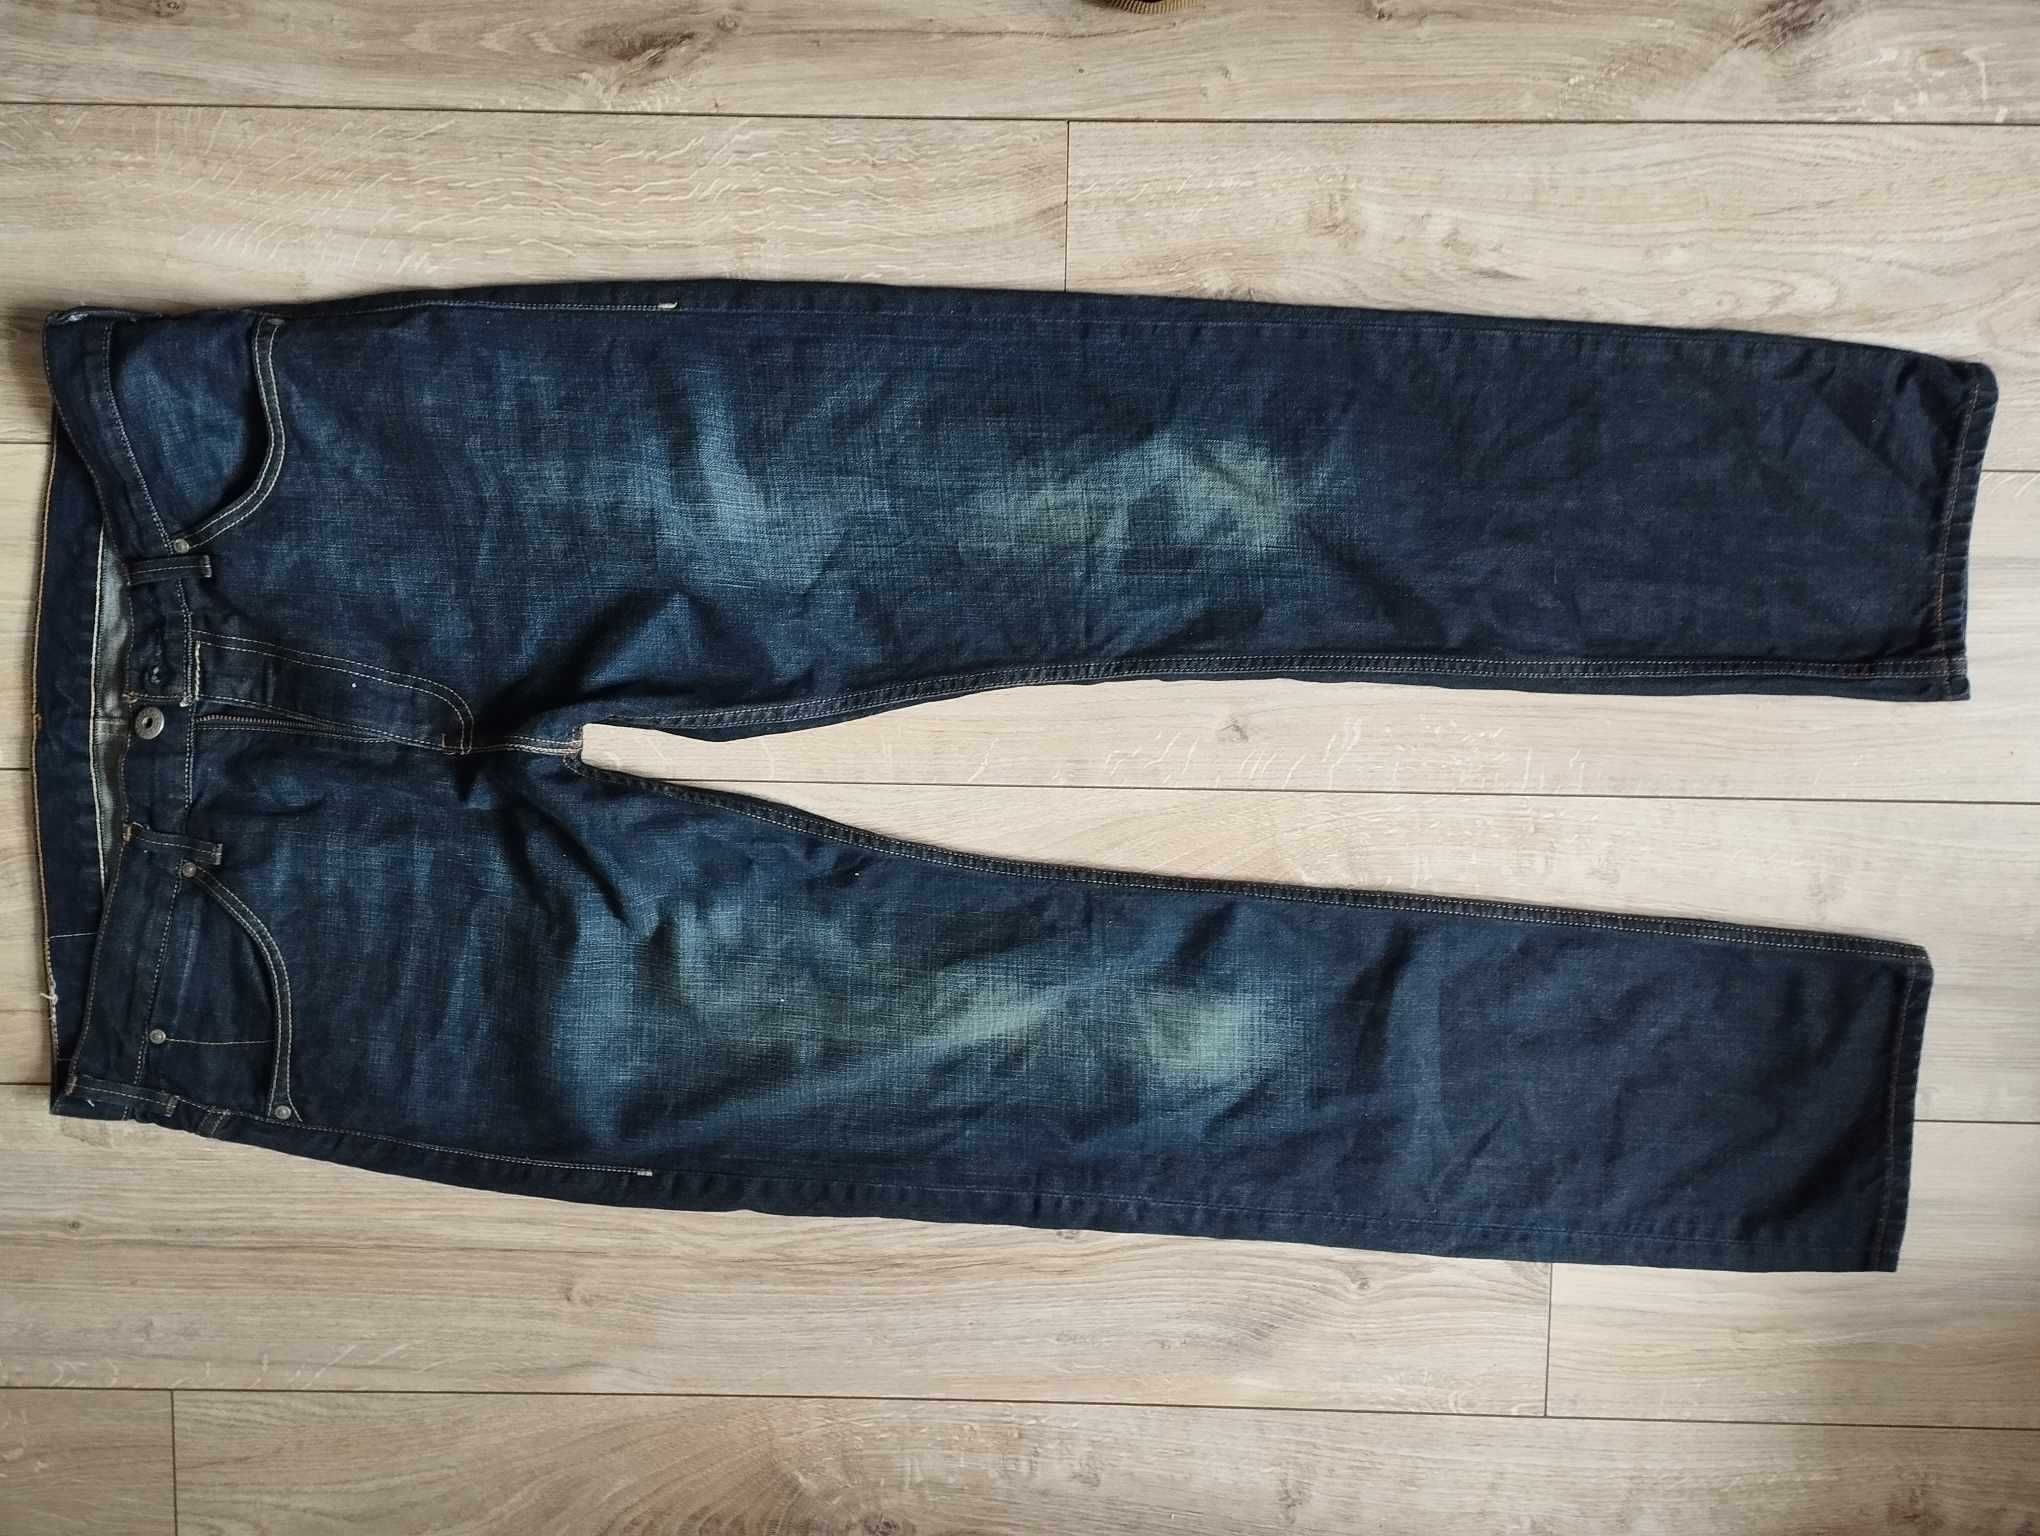 Levis W36L34 spodnie jeans stan ++BDB